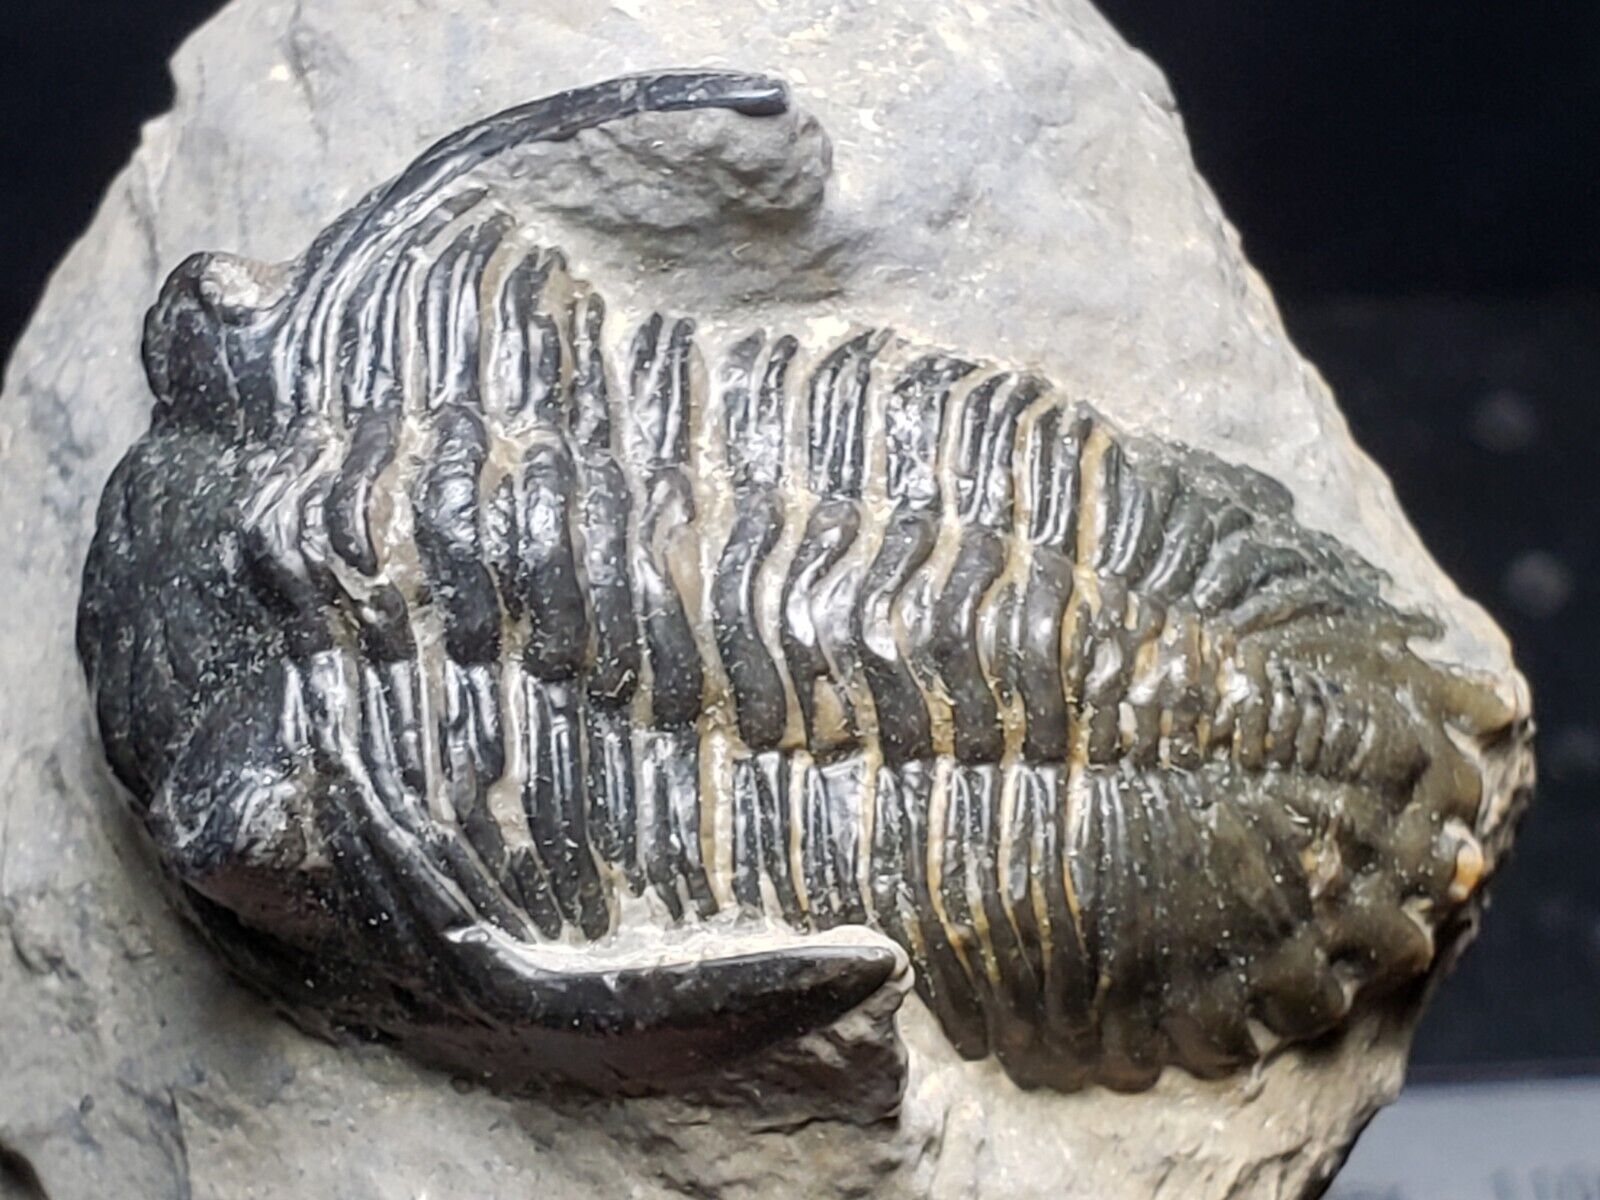 Trilobite Metacanthina Fossil, Devonian 390 Million YO, from Morocco (6.7 oz.)